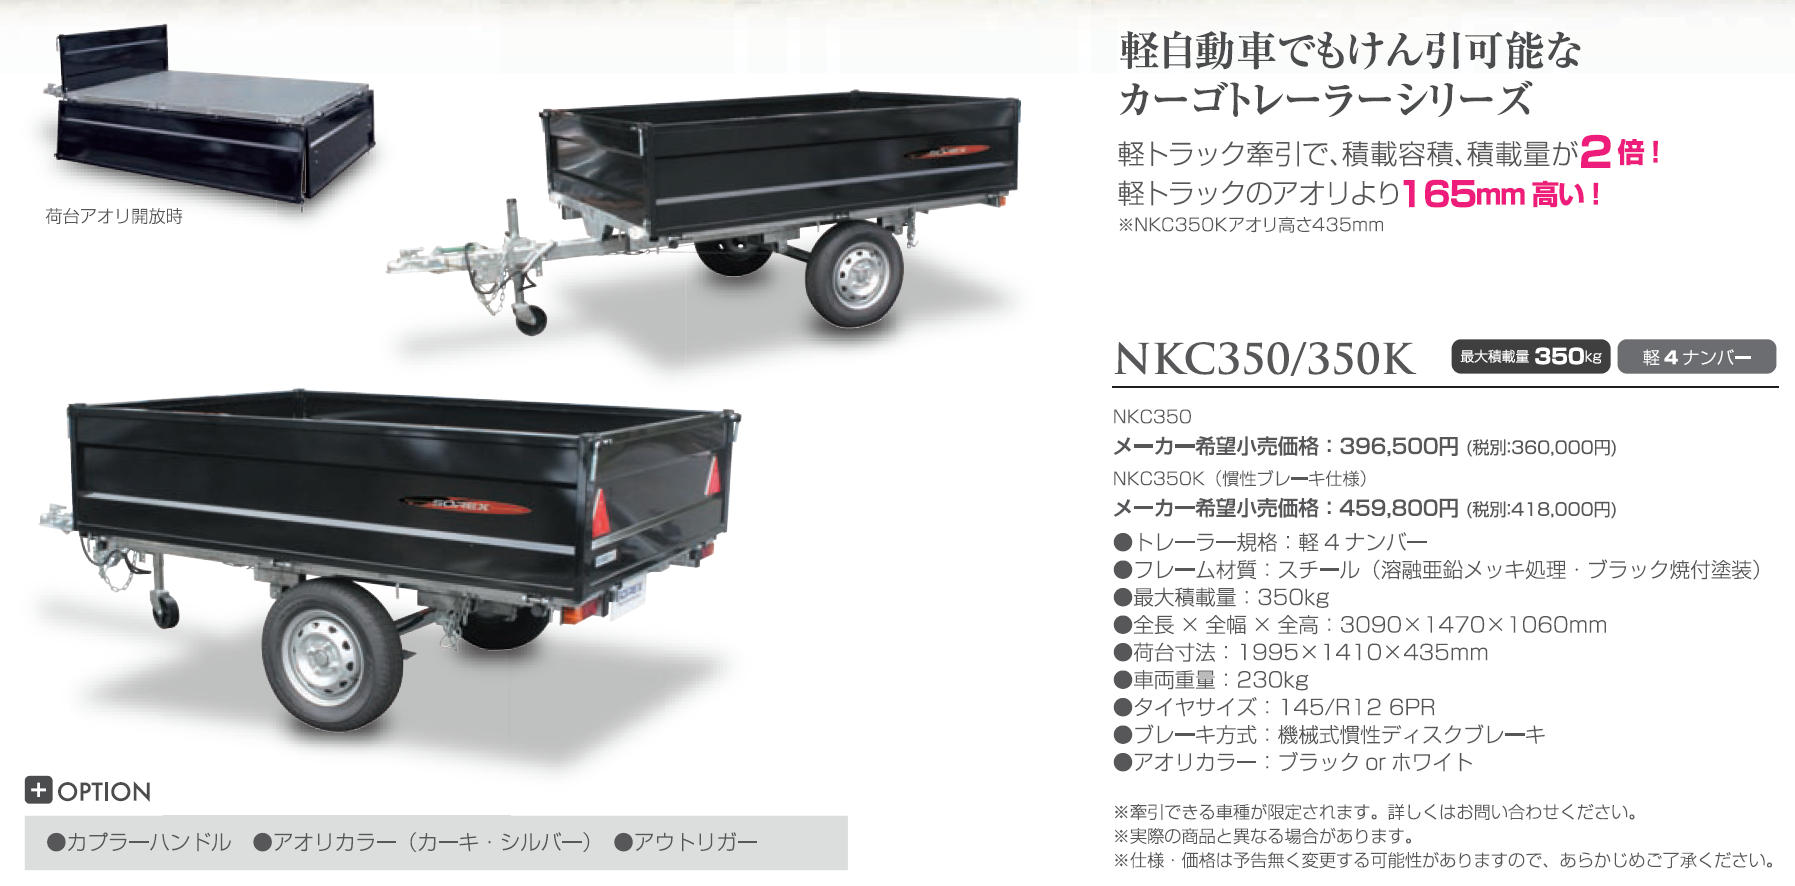 NKC350 - ソレックス【各種トレーラー開発・製造・販売】ソレックス